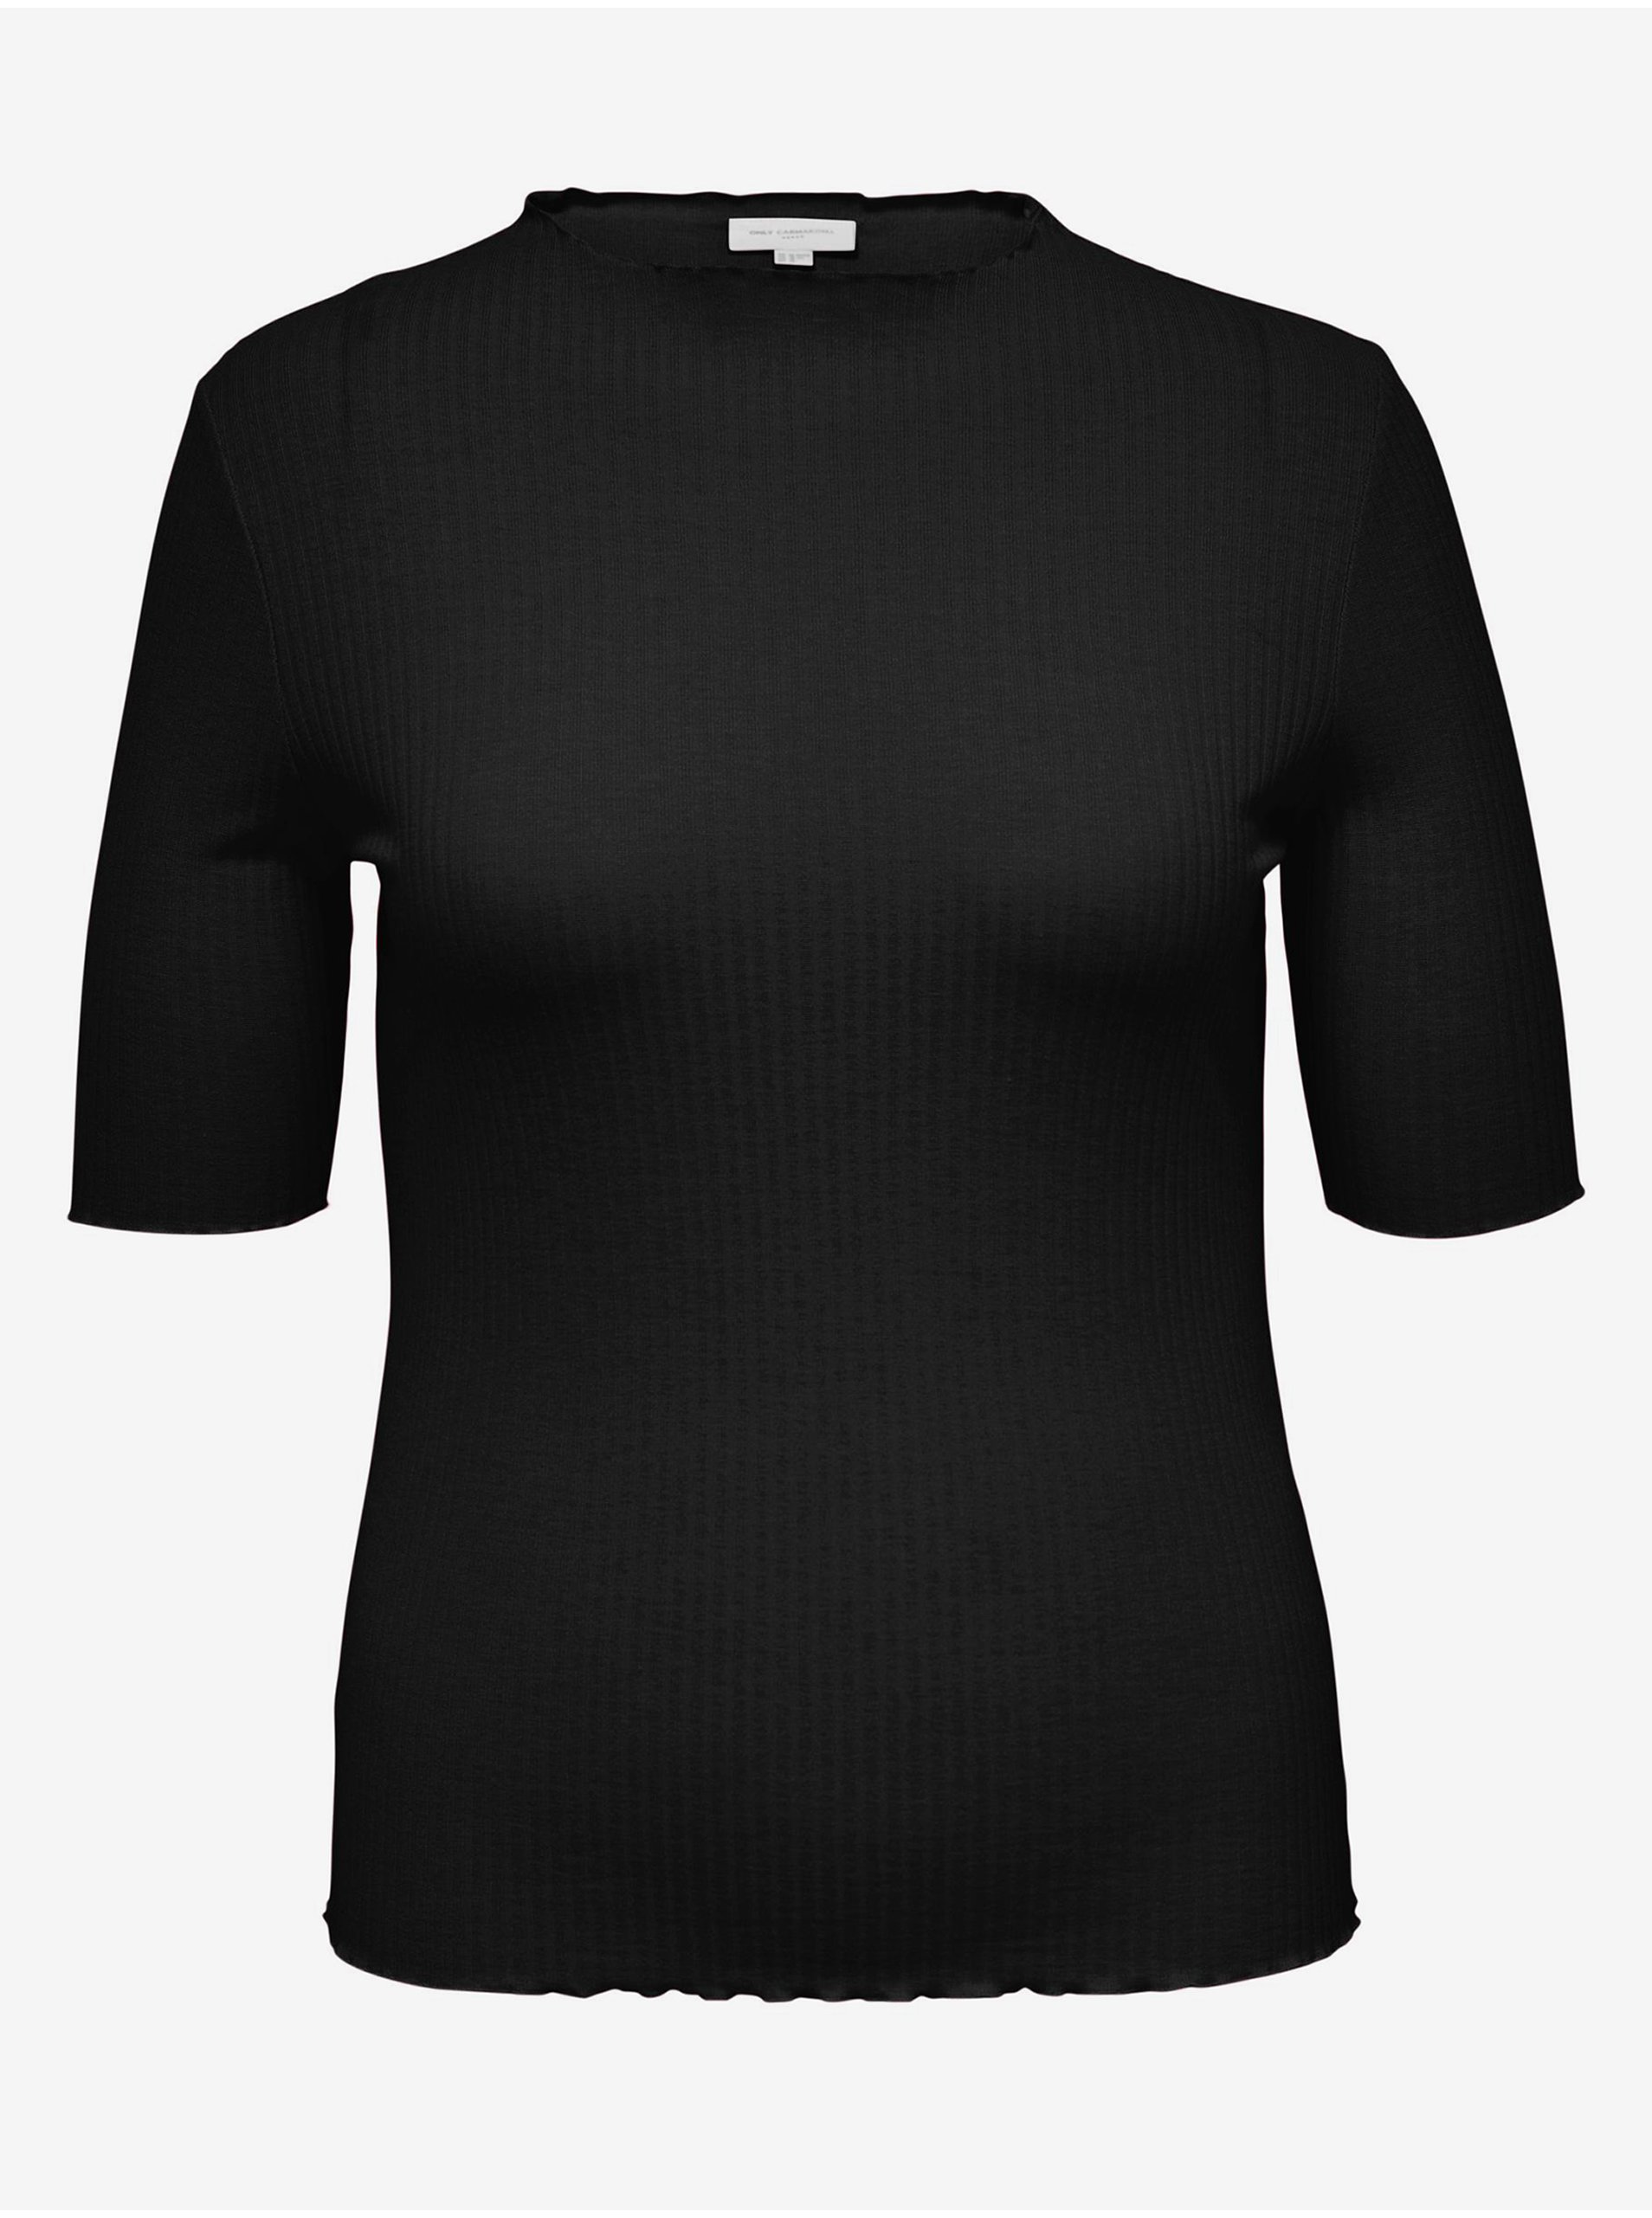 Lacno Čierne dámske rebrované tričko ONLY CARMAKOMA Ally